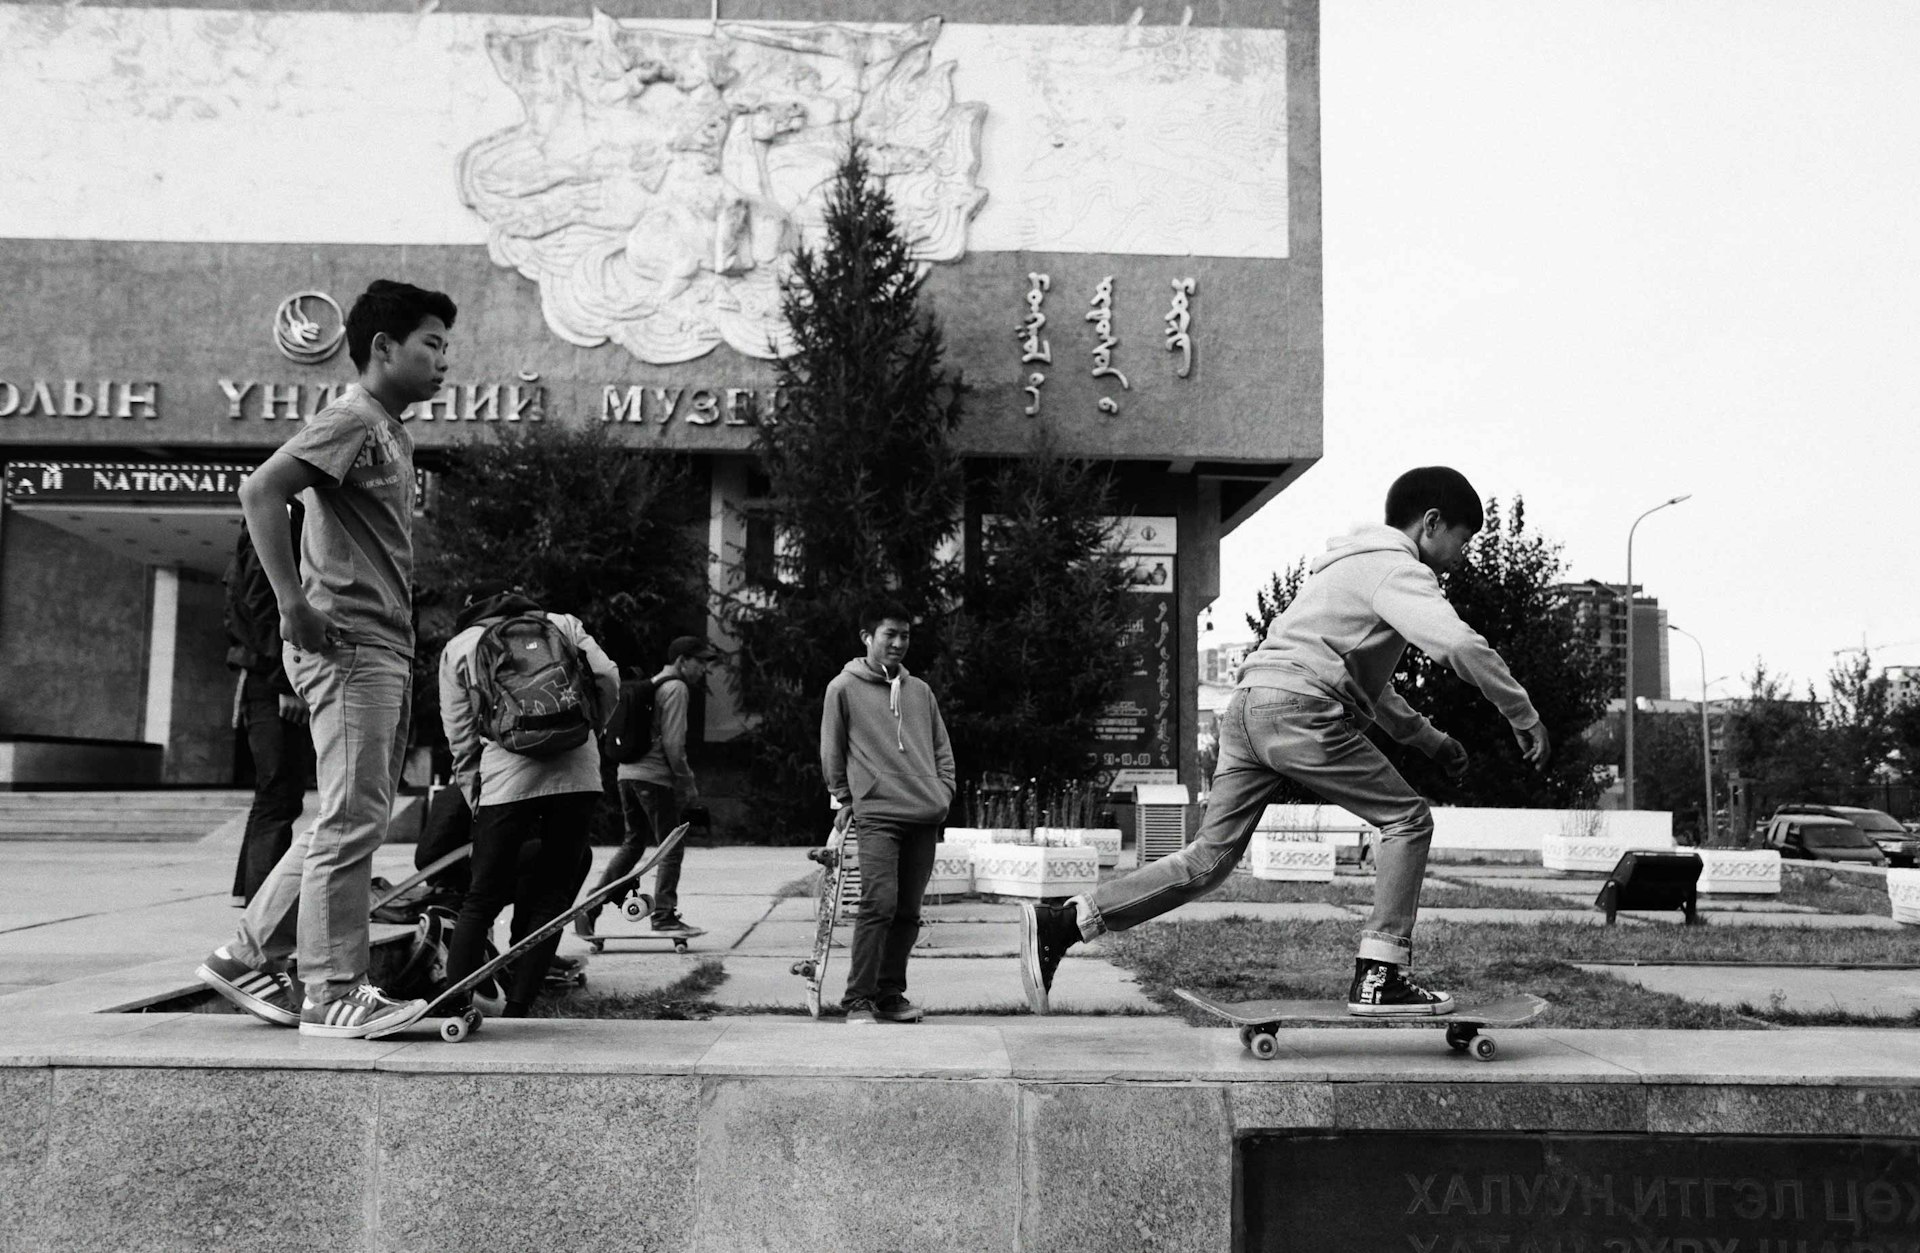 Mongolia Skate. Photo by Bejan Siavoshy.